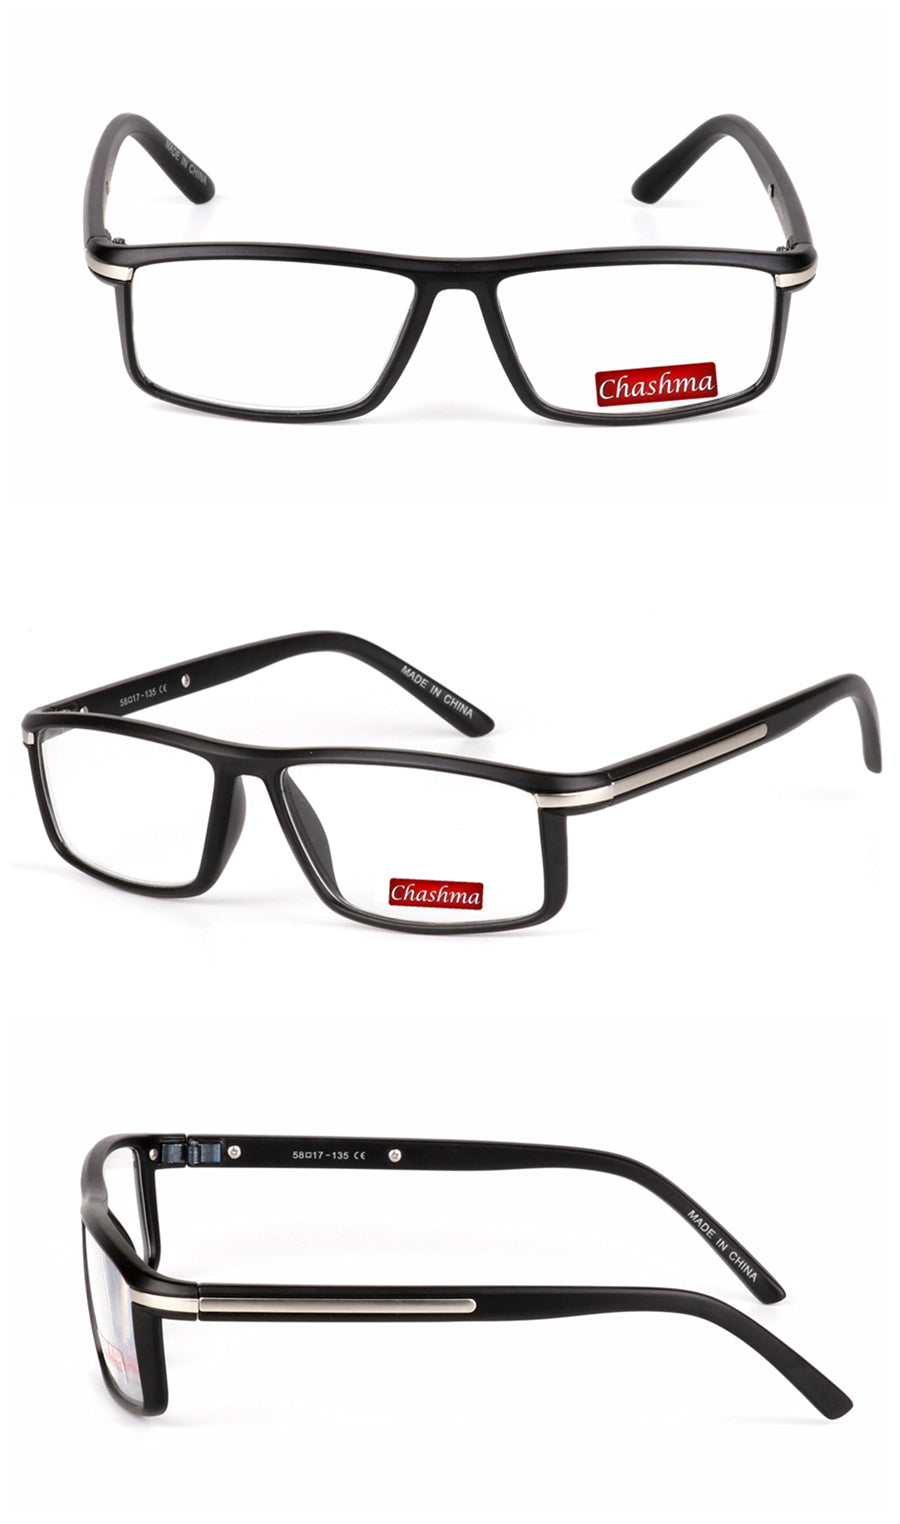 Excellent Quality Men Eyeglasses Unisex Reading Glasses 1.0,1.5,2.0,2.5,3.0,3.5 Reading Glasses Chashma   